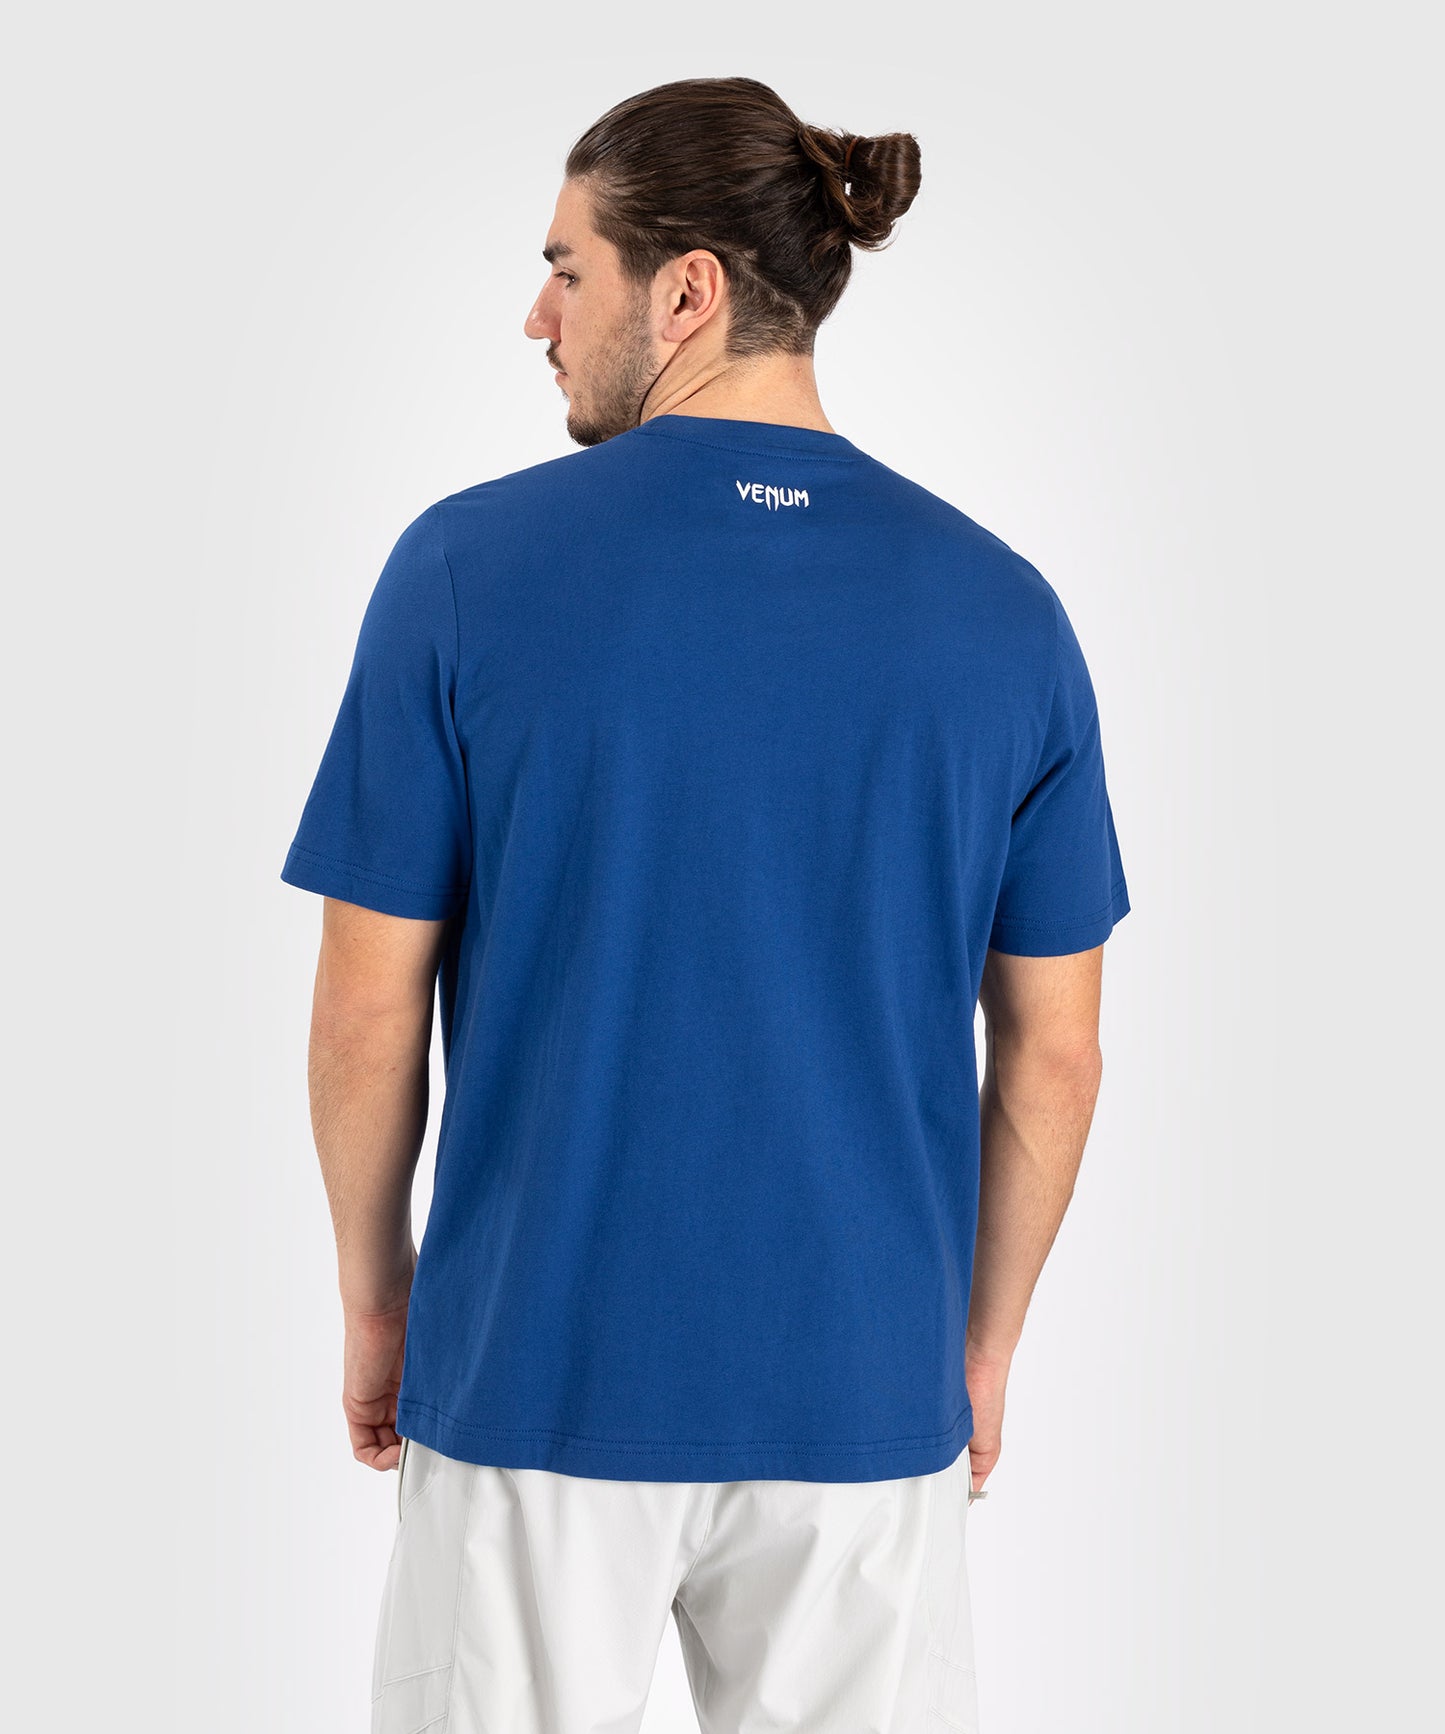 UFC Venum Classic  T-Shirt - Navy Blue/White